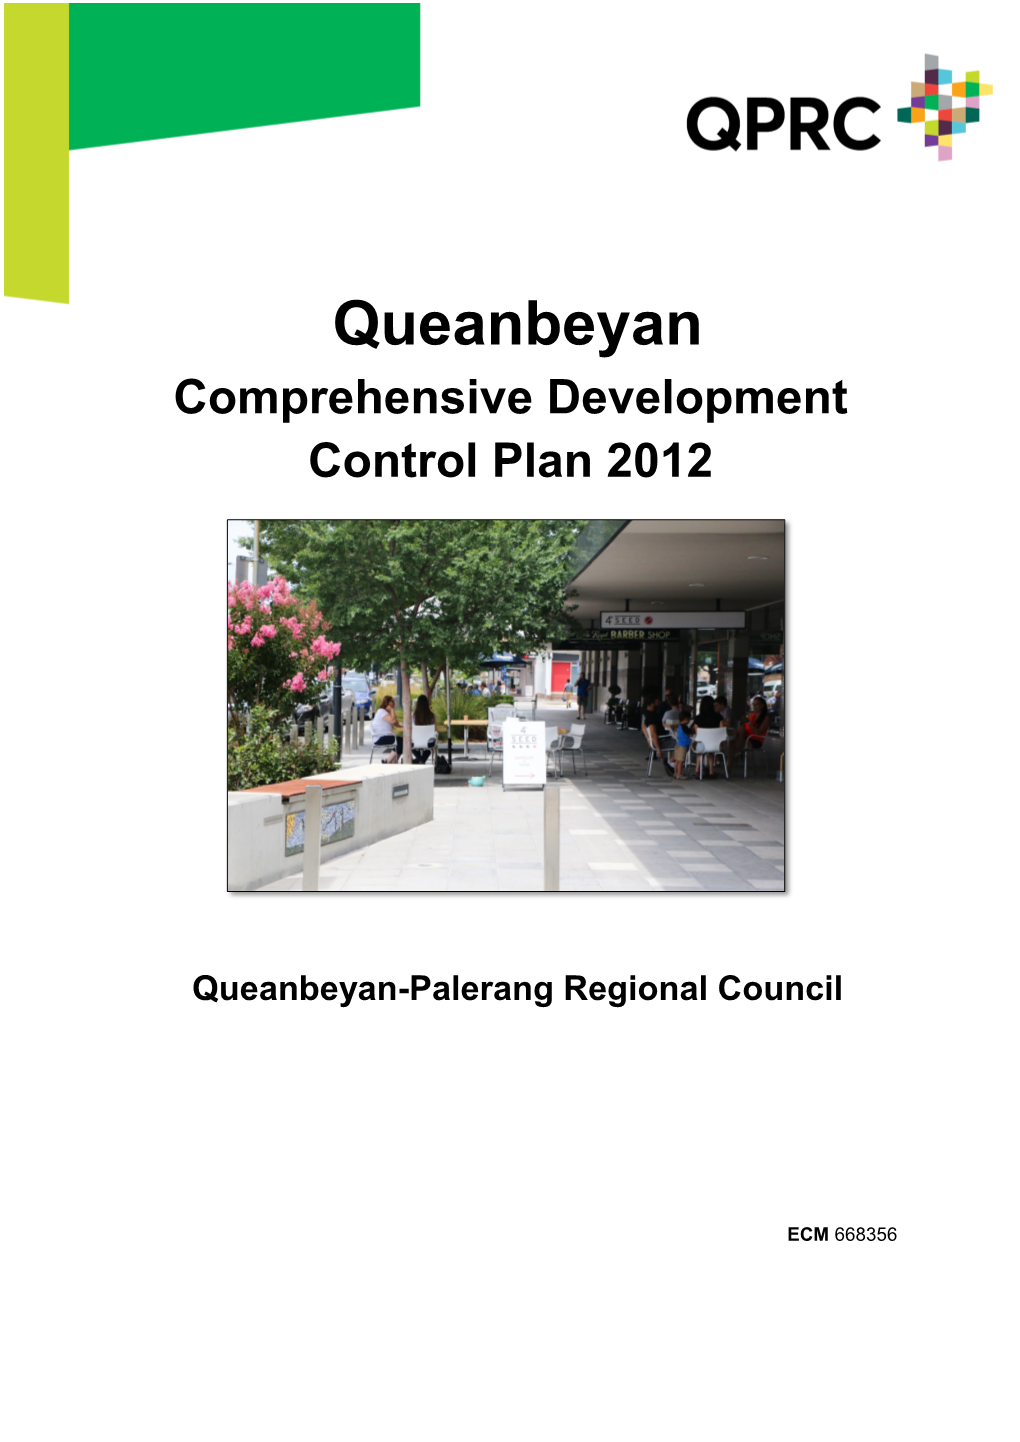 Queanbeyan Comprehensive Development Control Plan 2012